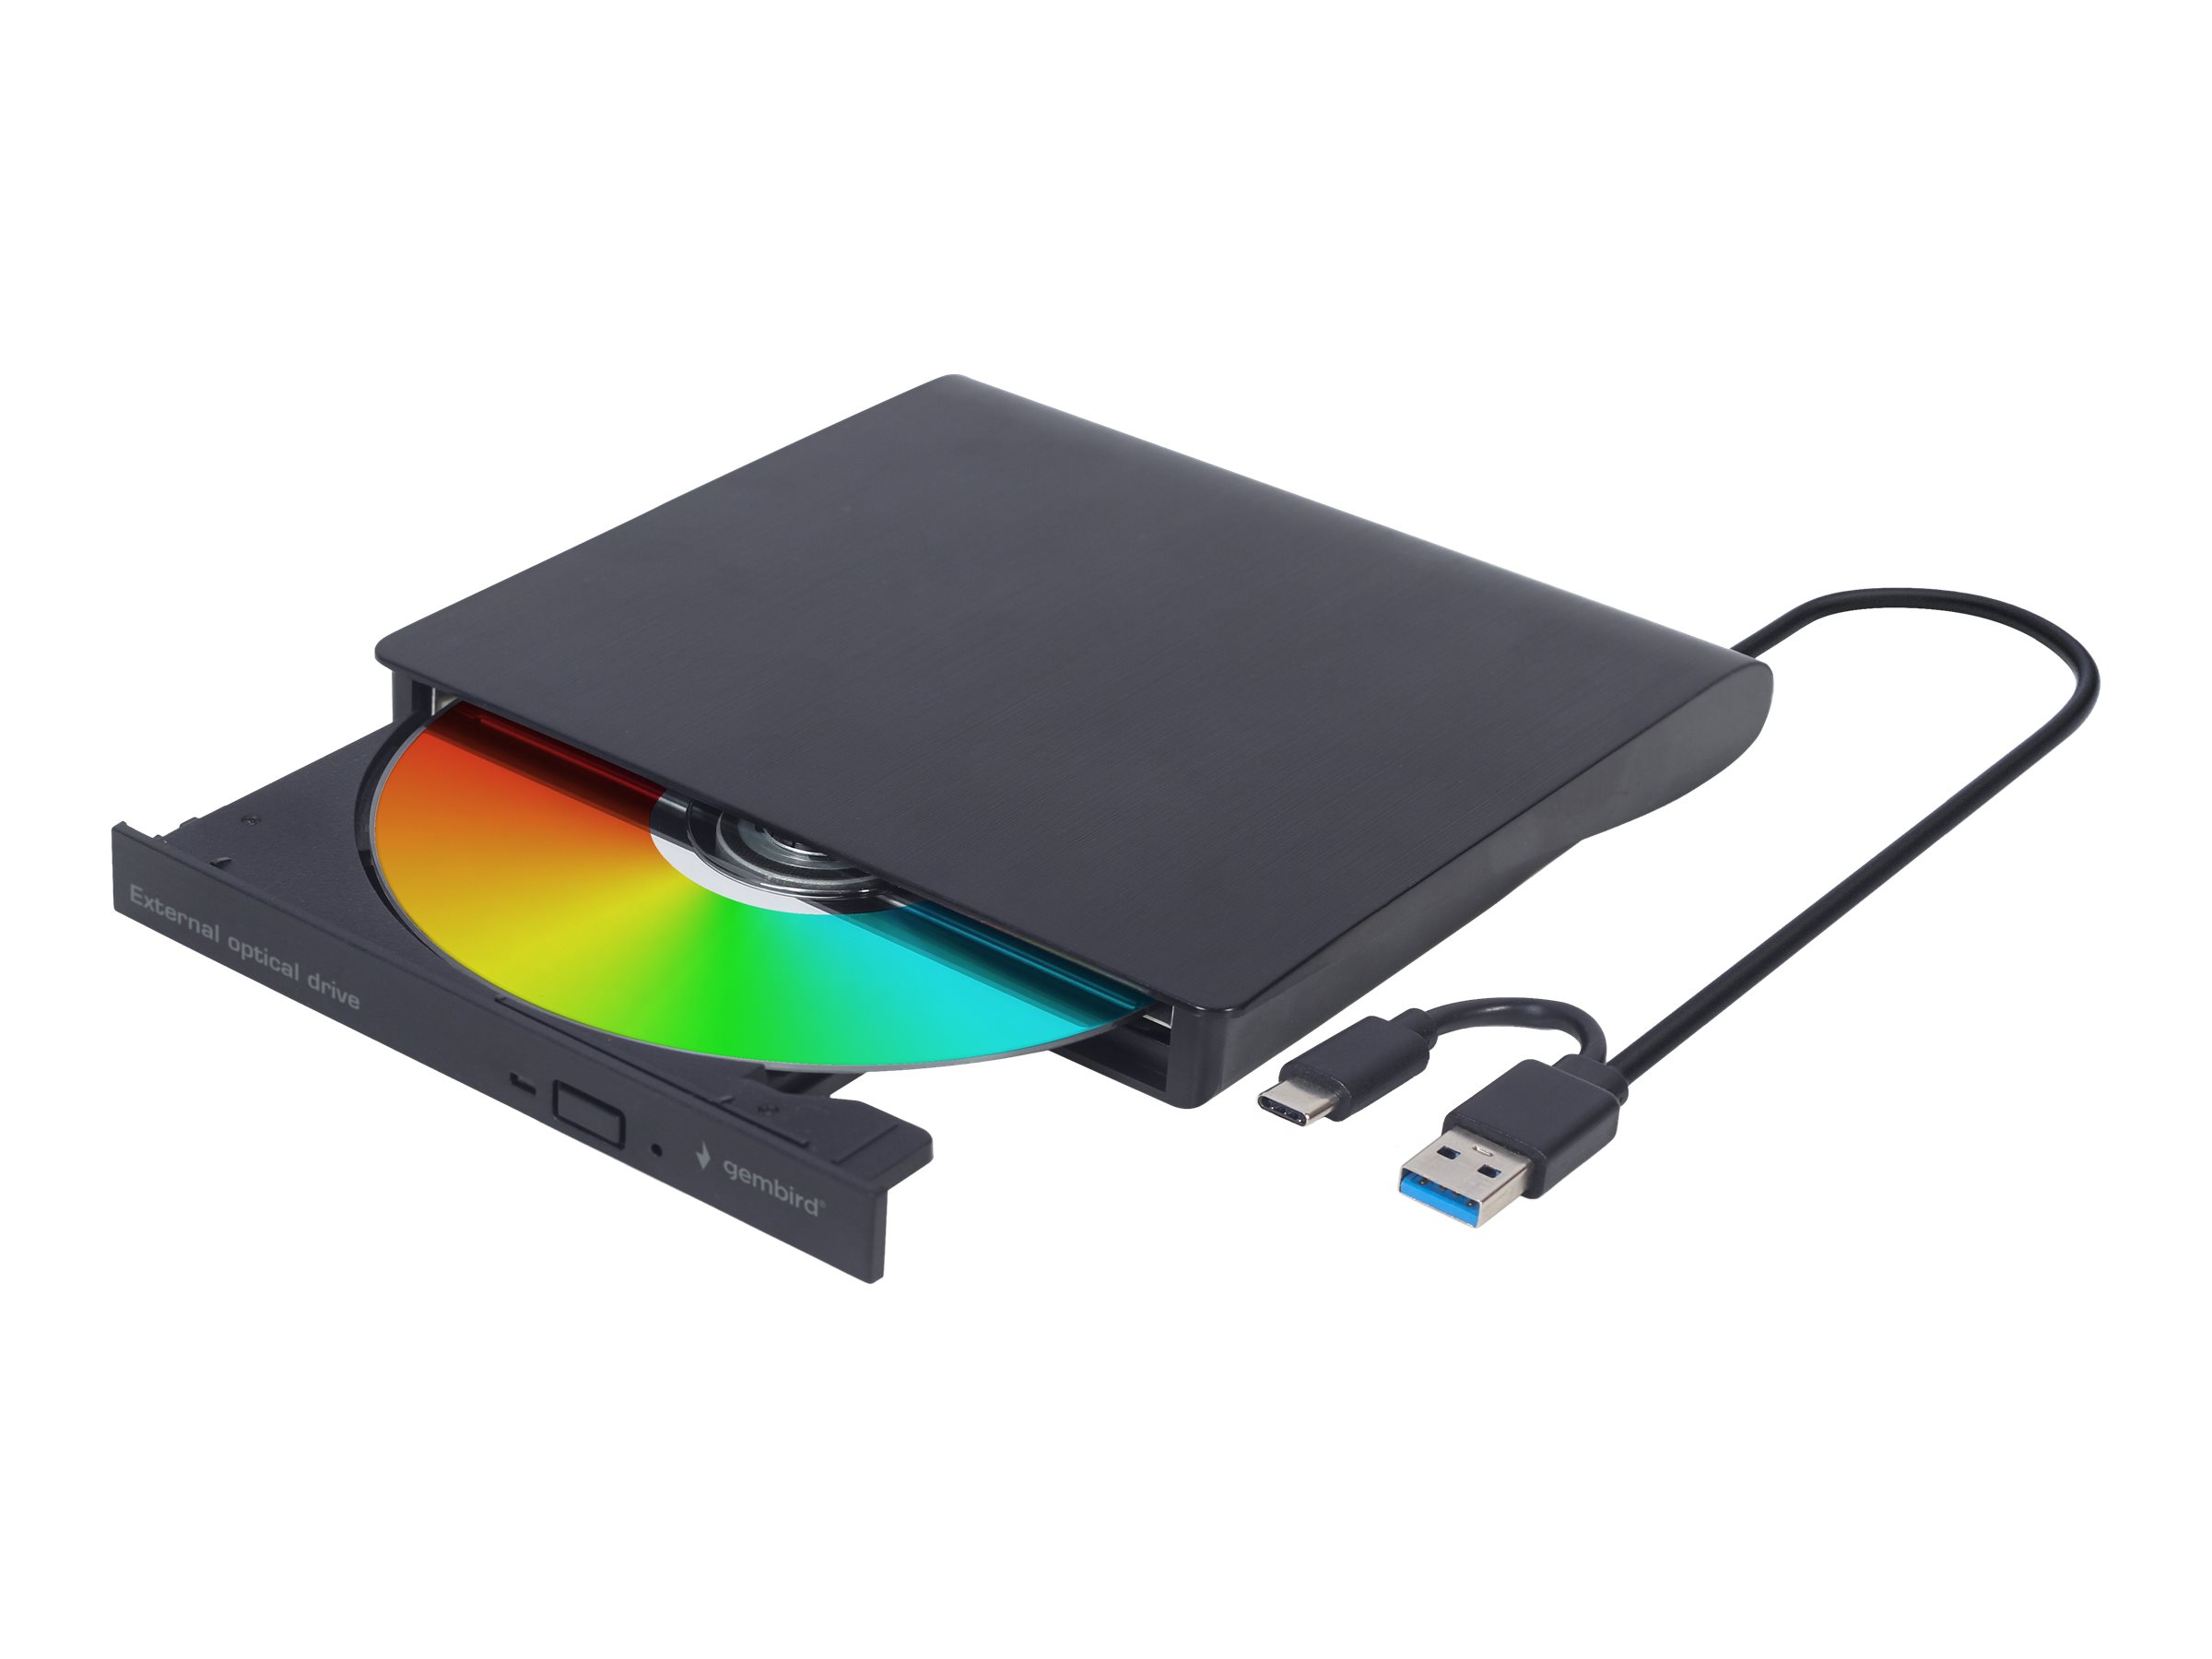 Gembird DVD-USB-03 - Laufwerk - DVDRW (R DL) / DVD-RAM